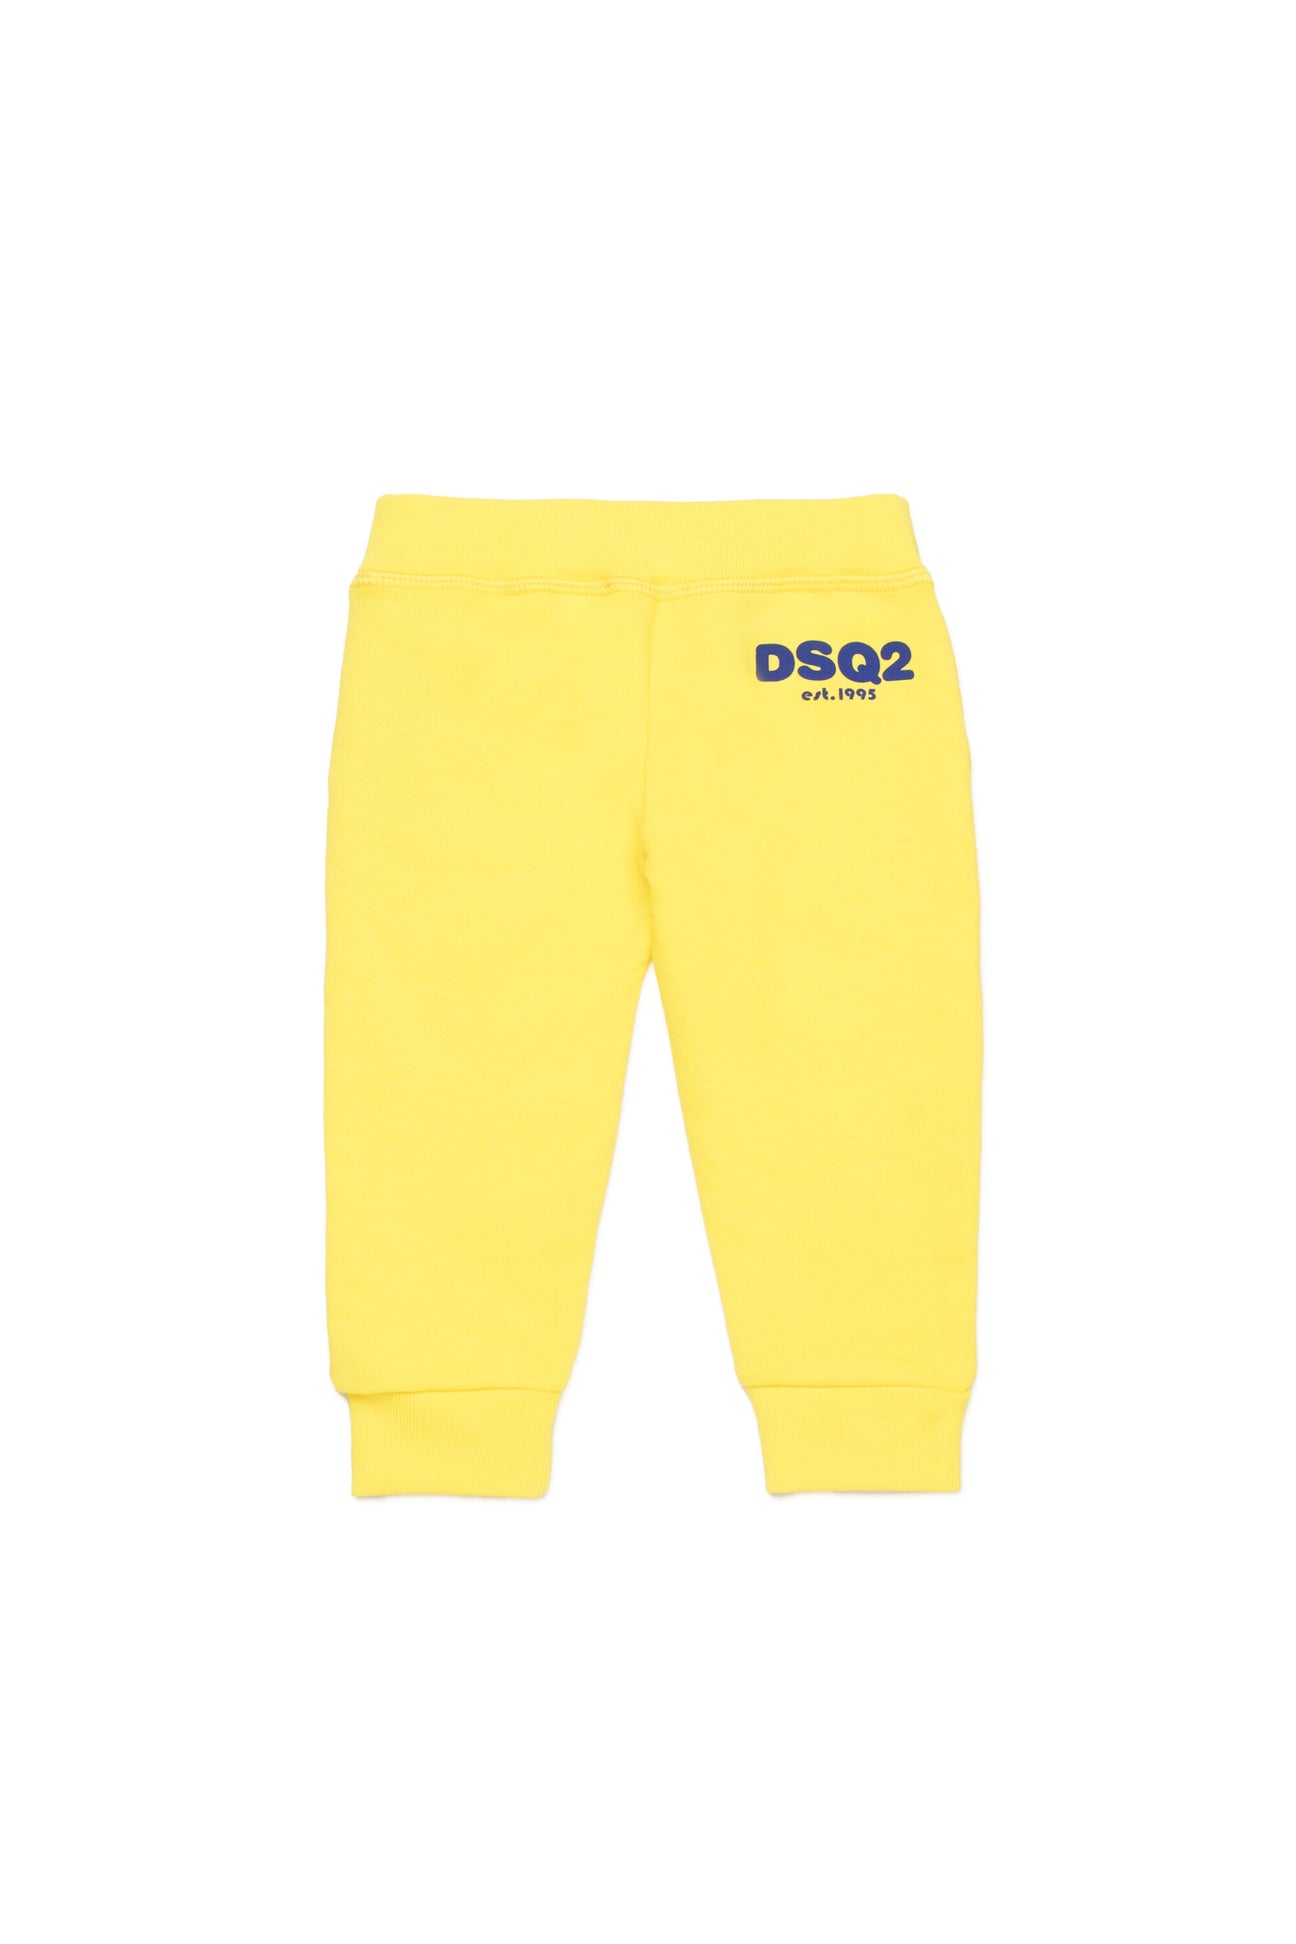 Fleece jogger pants with DSQ2 logo est.1995 Fleece jogger pants with DSQ2 logo est.1995